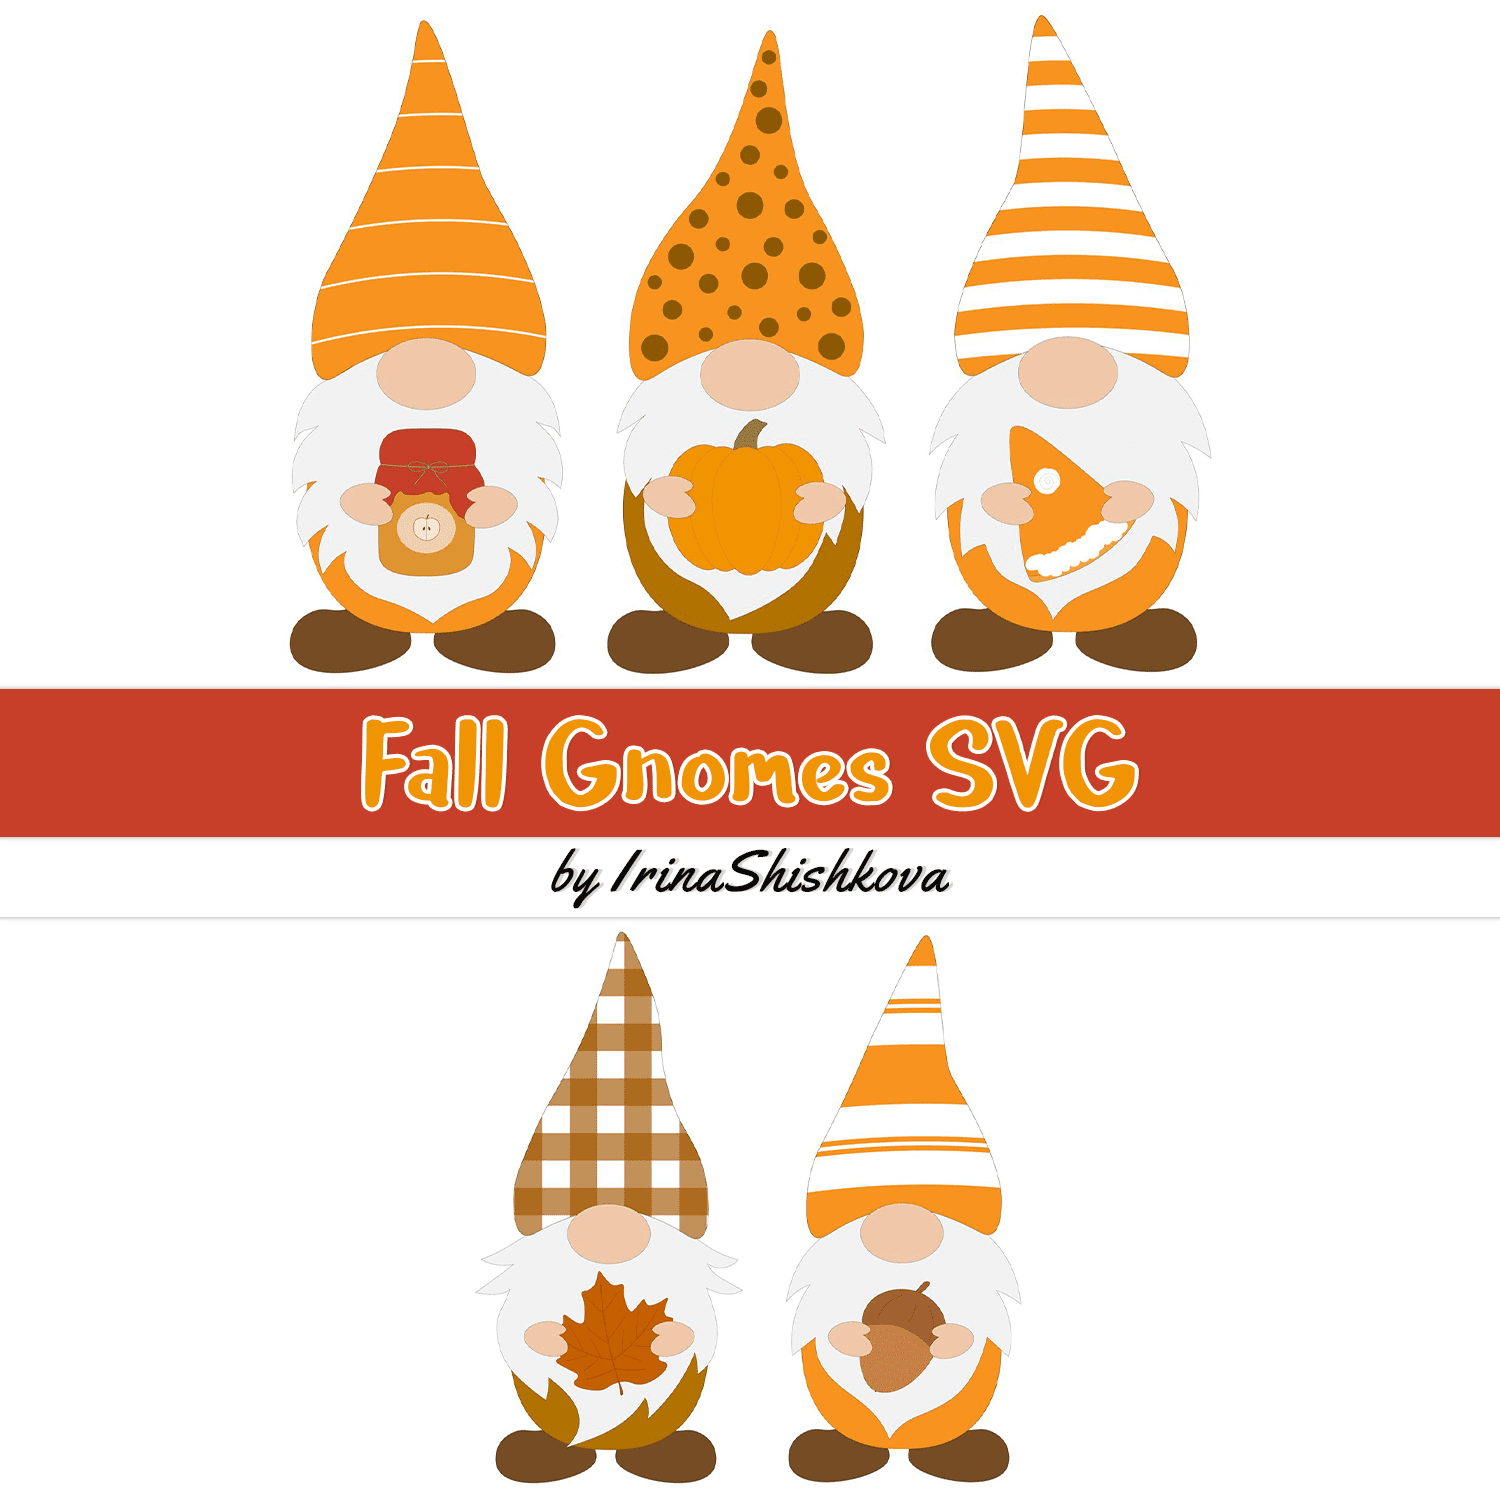 Fall Gnomes SVG. Thanksgiving Gnomes cover.